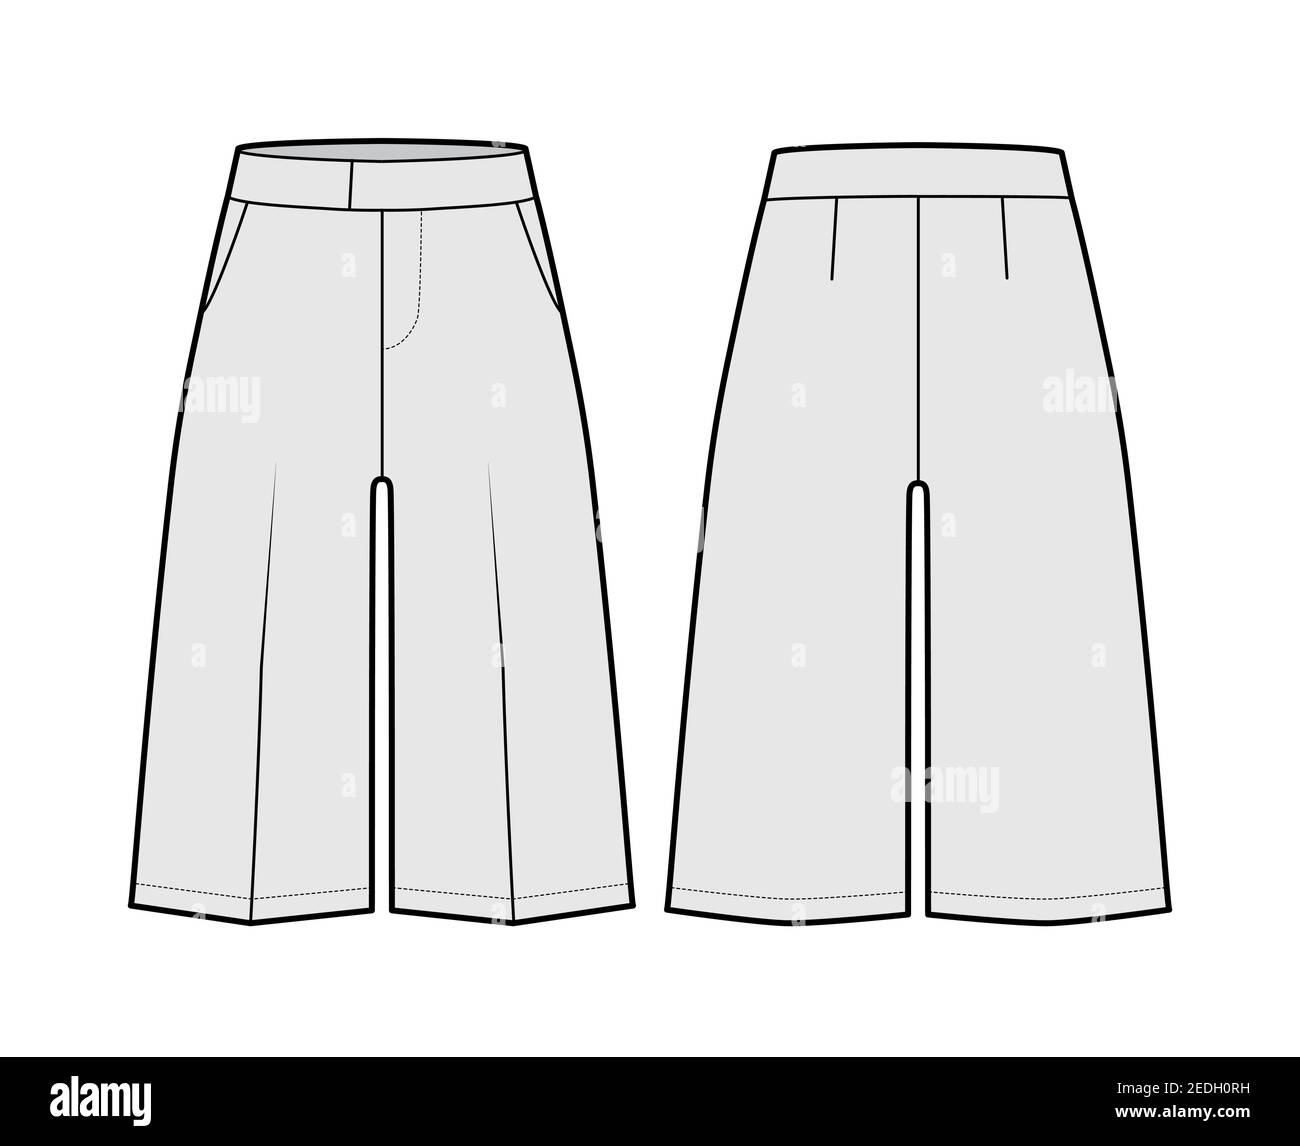 Short Bermuda dress pants technical fashion illustration with knee ...